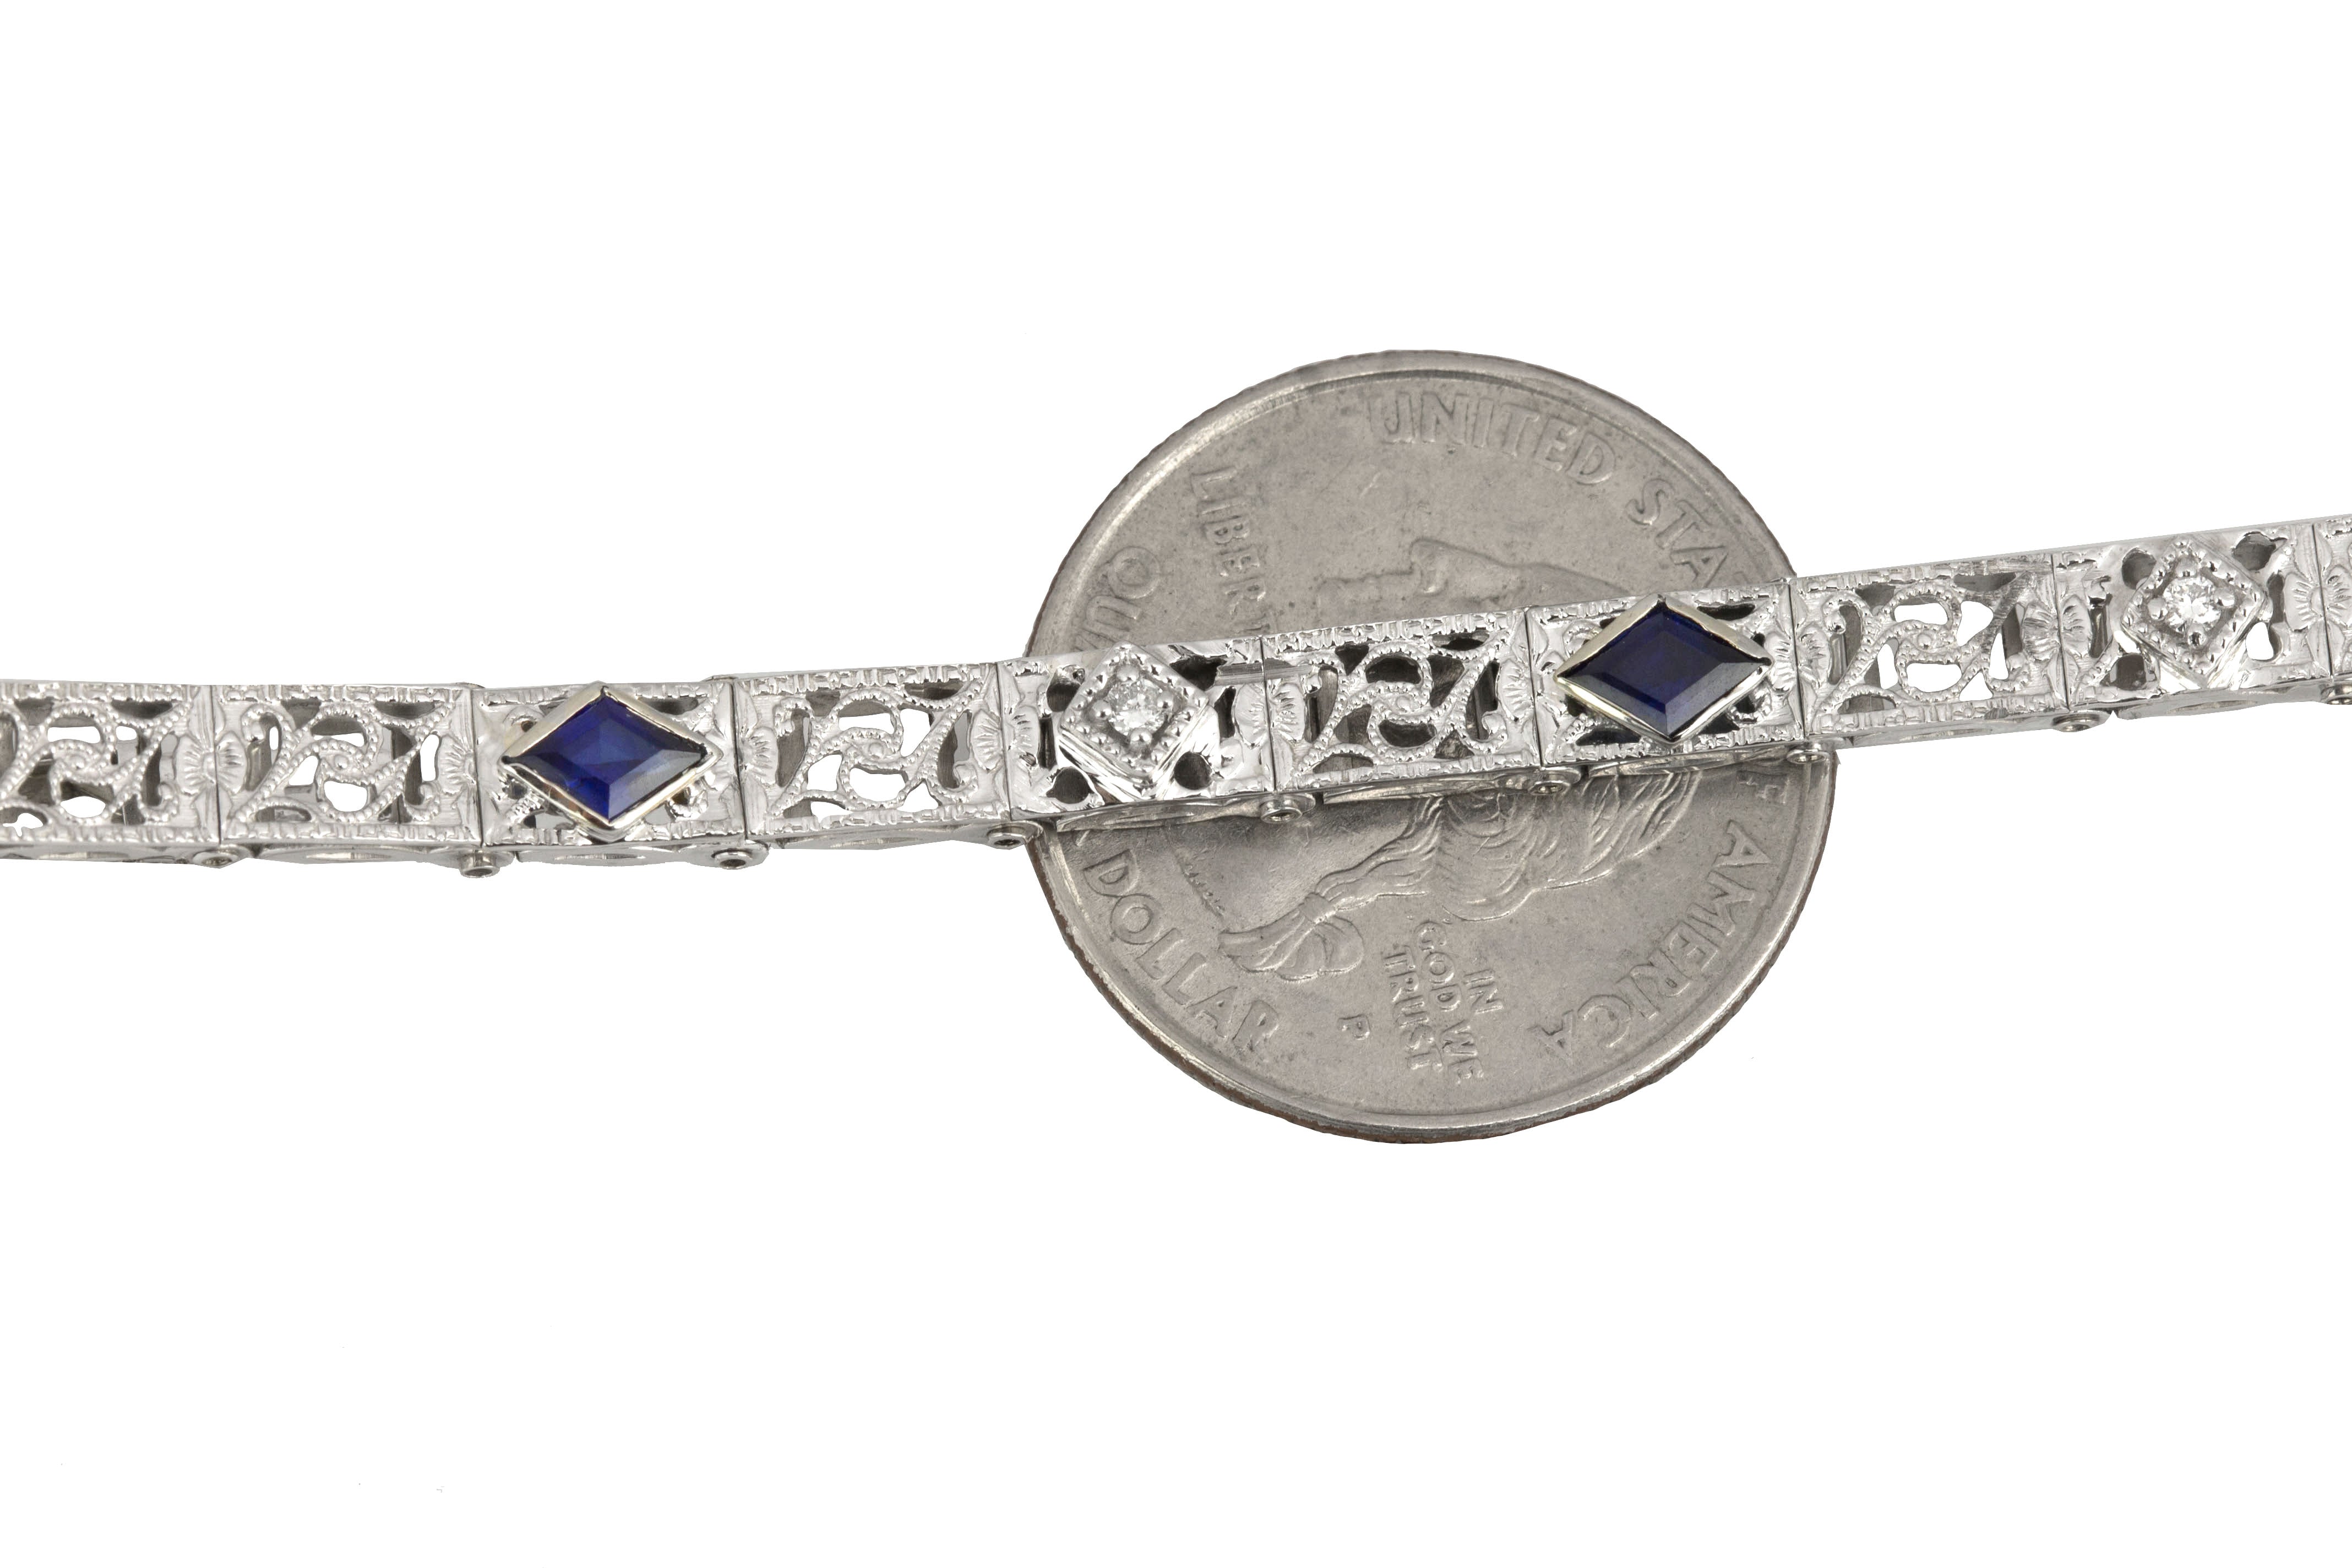 1930's Art Deco 14K White Gold 0.04ctw Diamond Sapphire Floral Filigree Bracelet